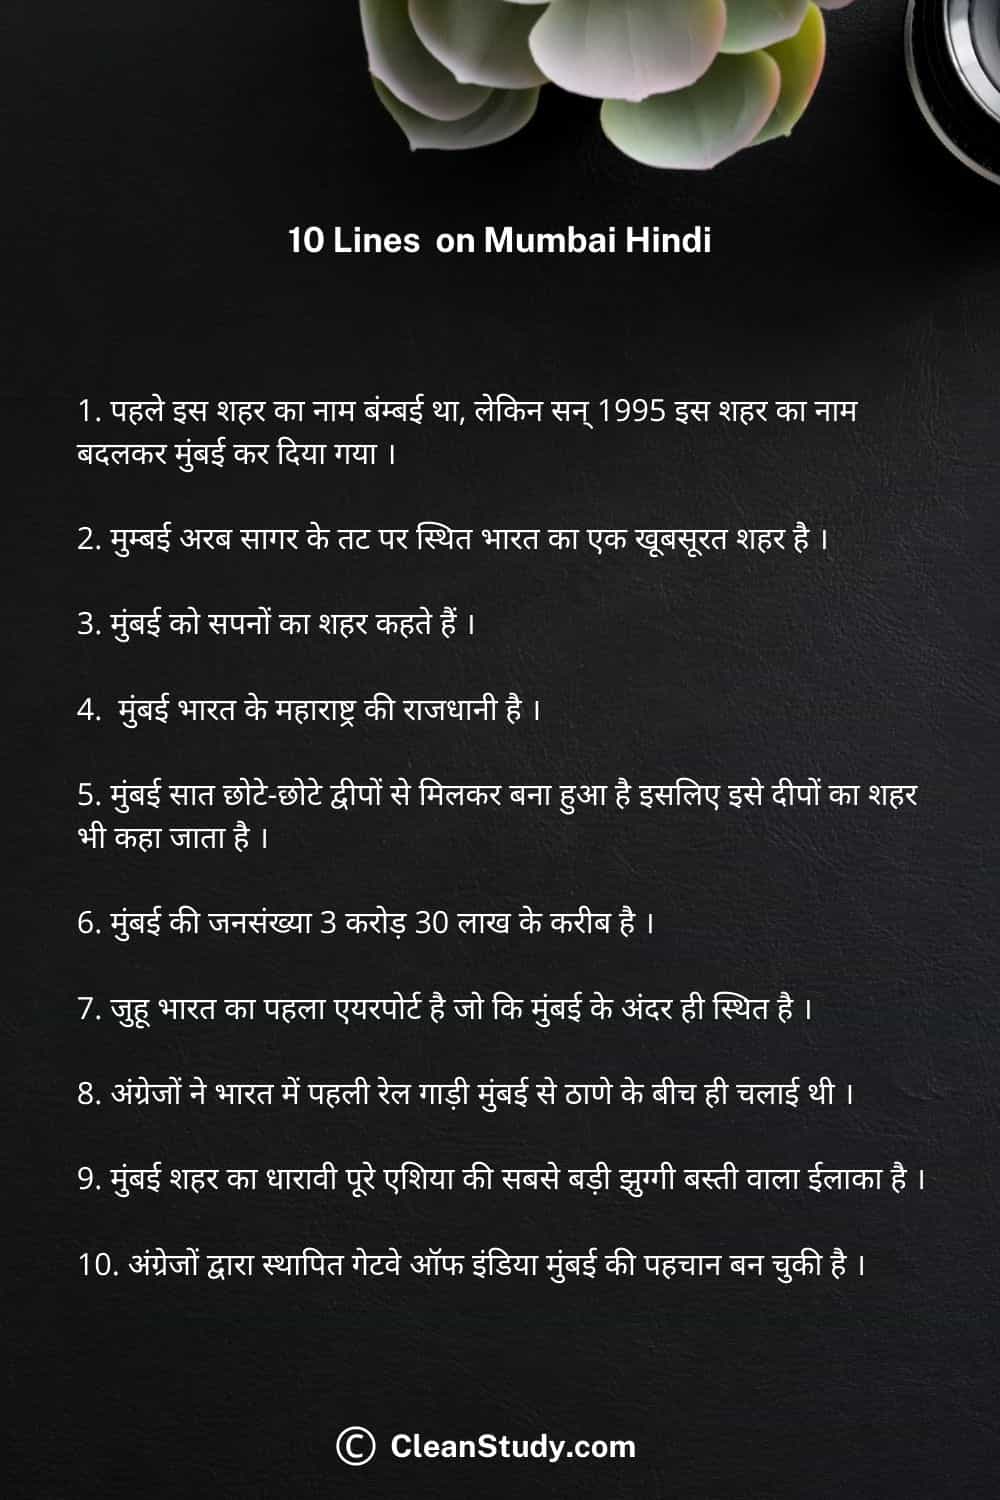 10 lines on mumbai in hindi